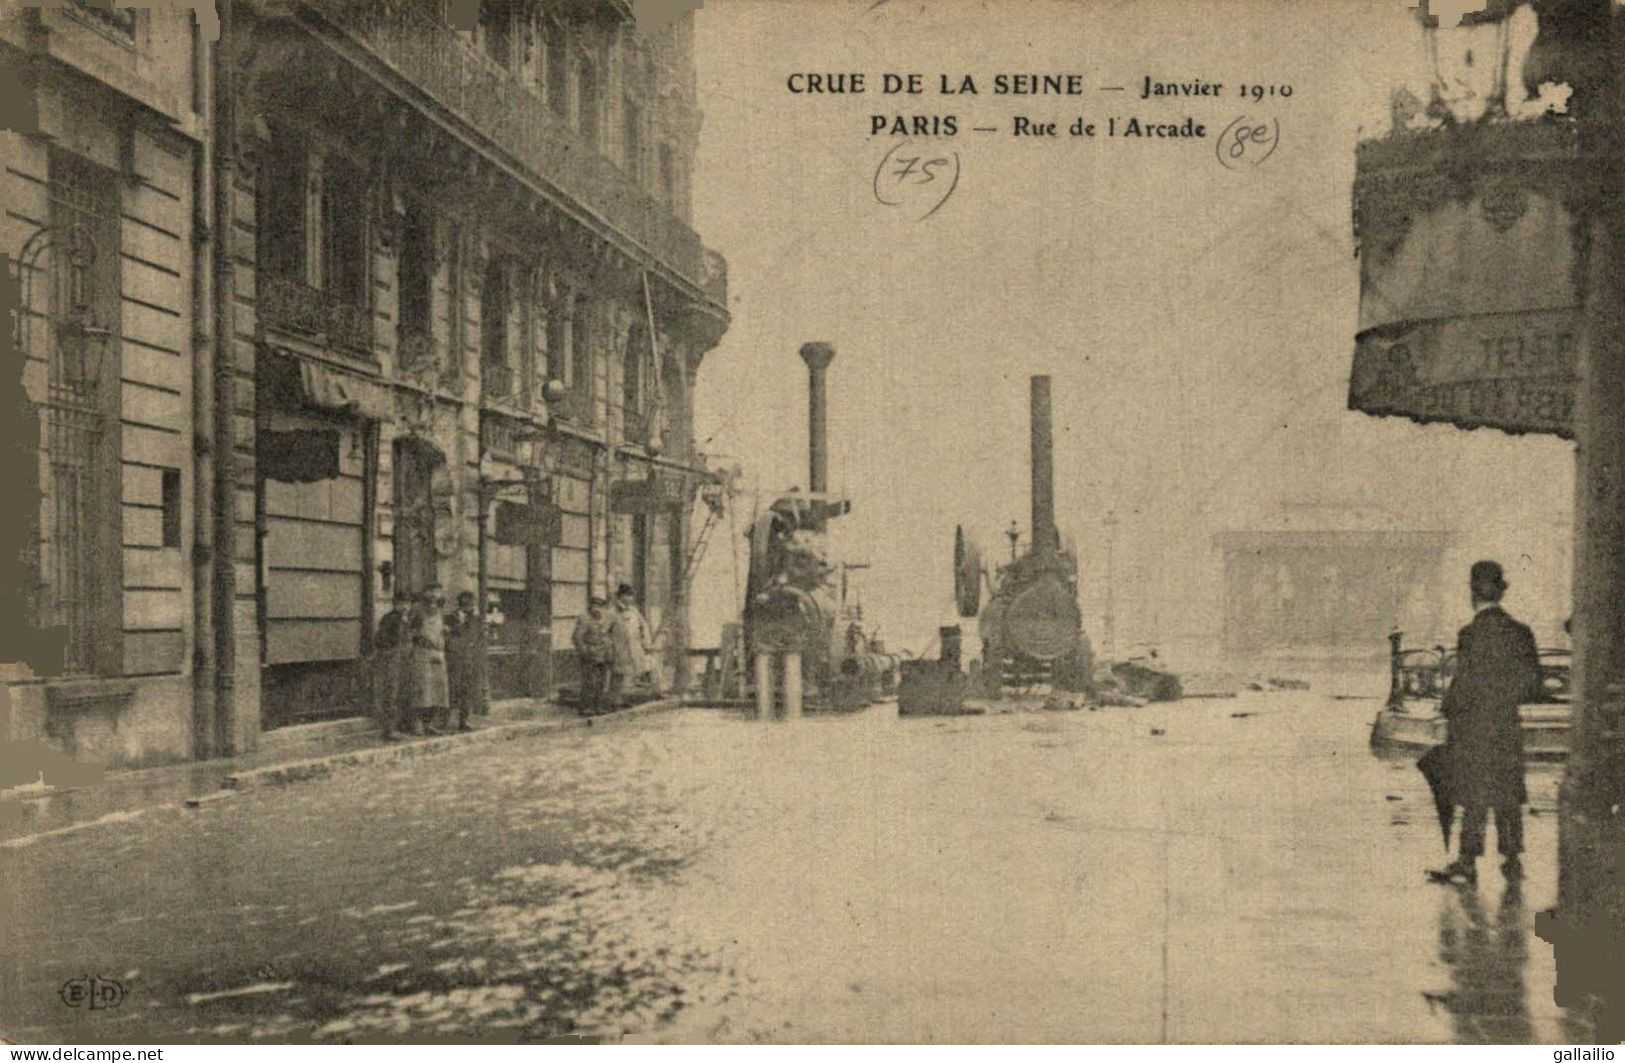 PARIS CRUE DE LA SEINE RUE DE L'ARCADE - Paris Flood, 1910